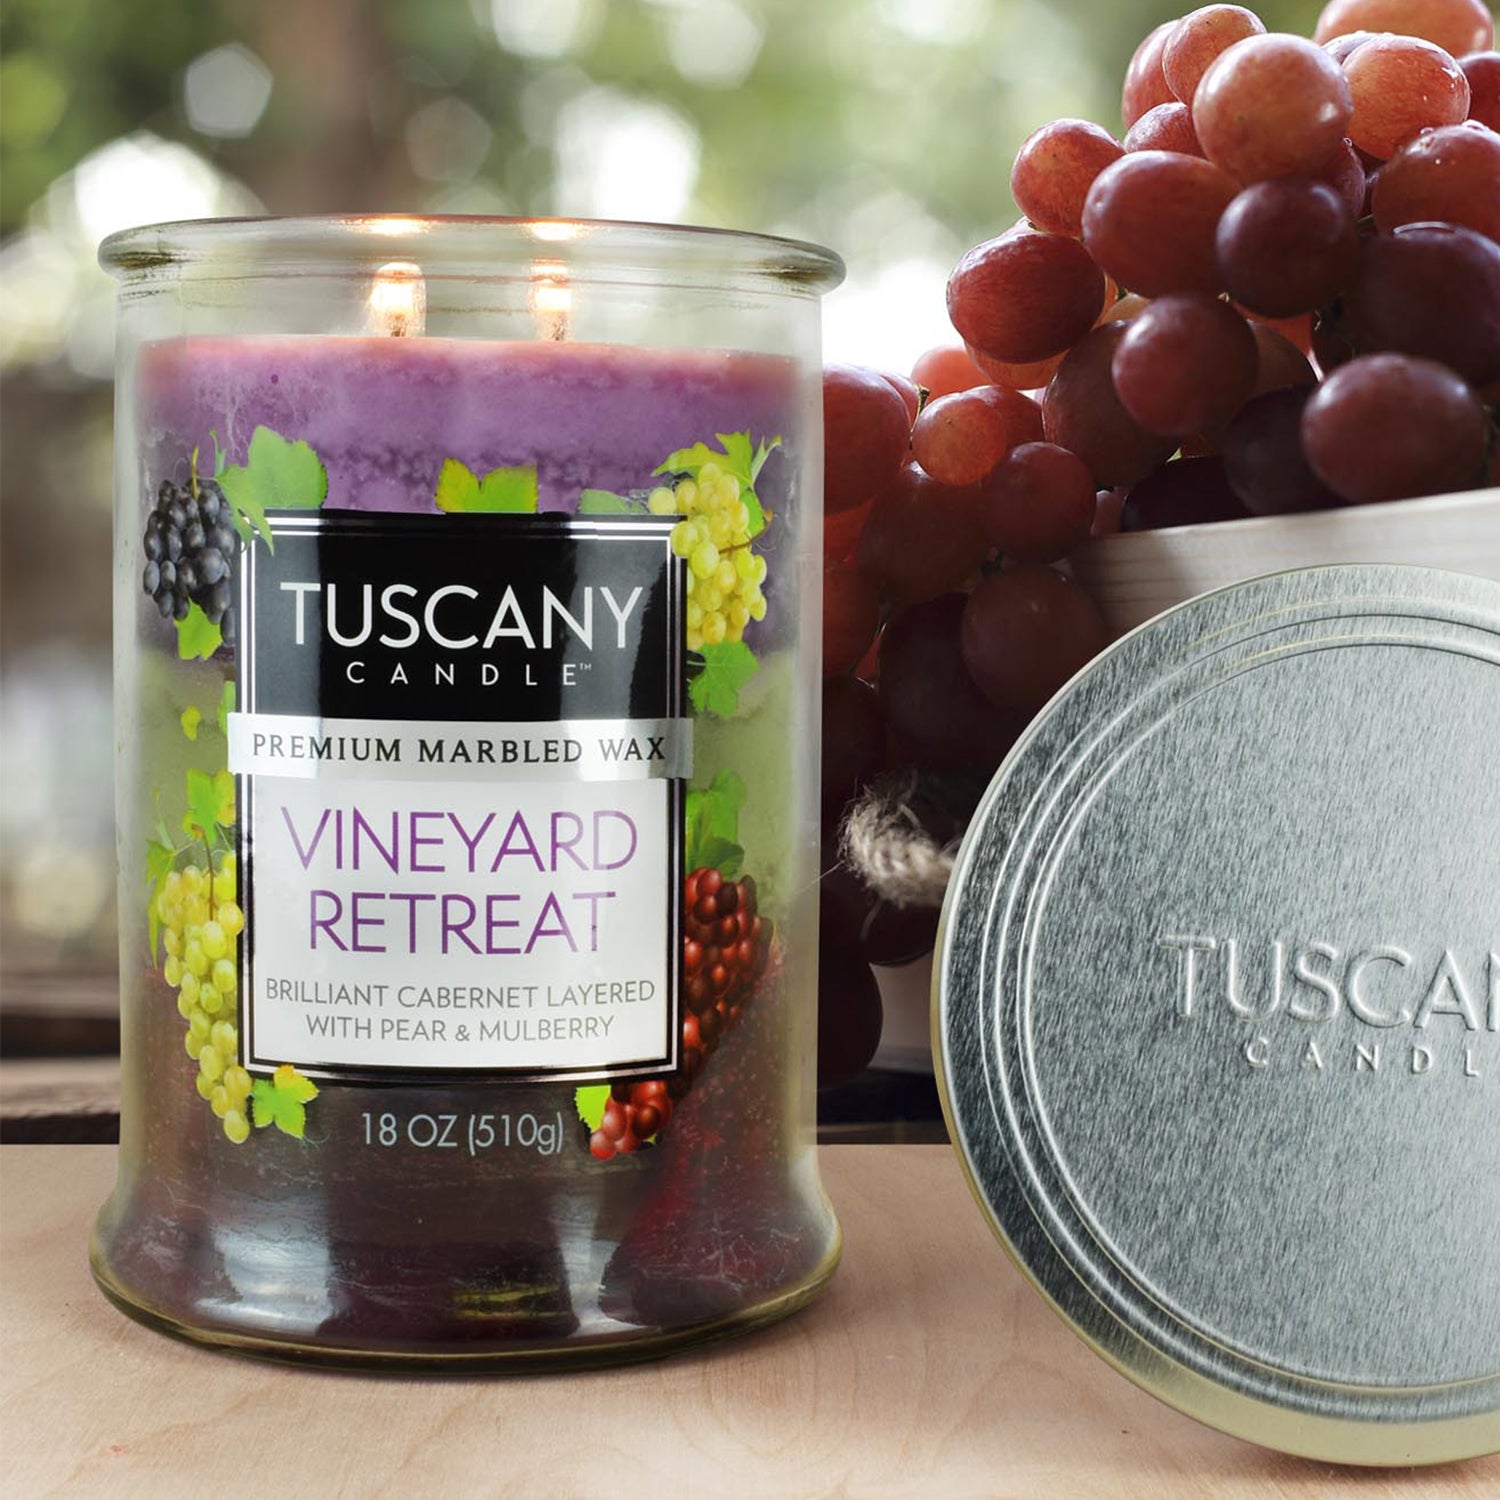 Tuscany Candle Vineyard Retreat Long-Lasting Scented Jar Candle (18 oz).